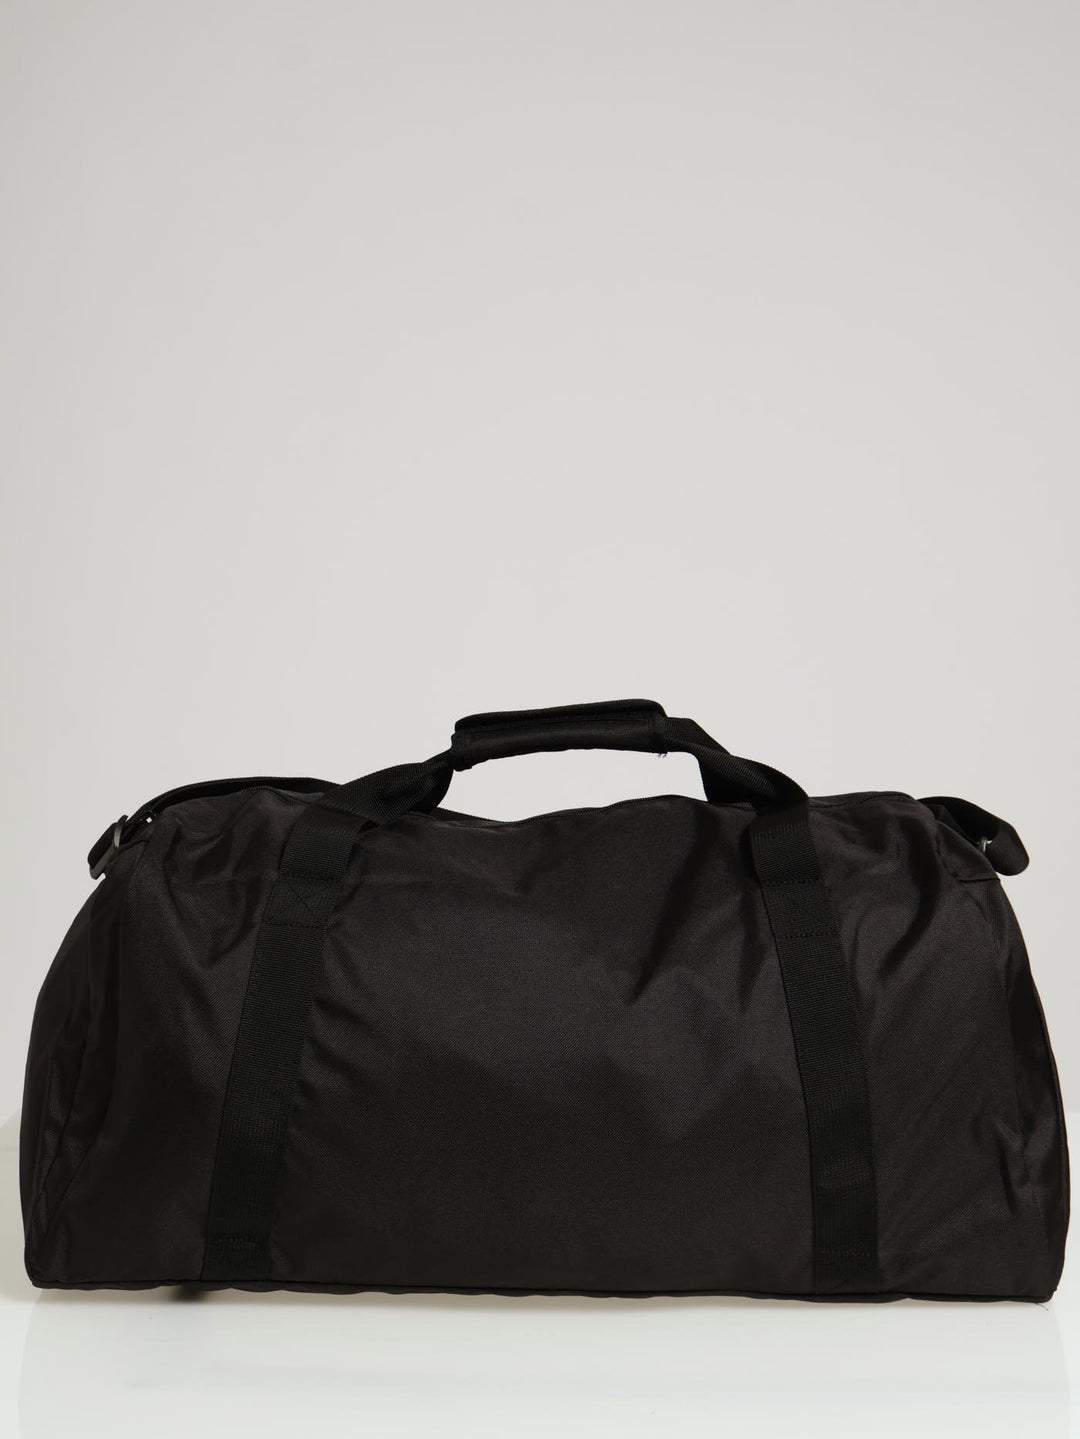 Phase Sportsbag - Black